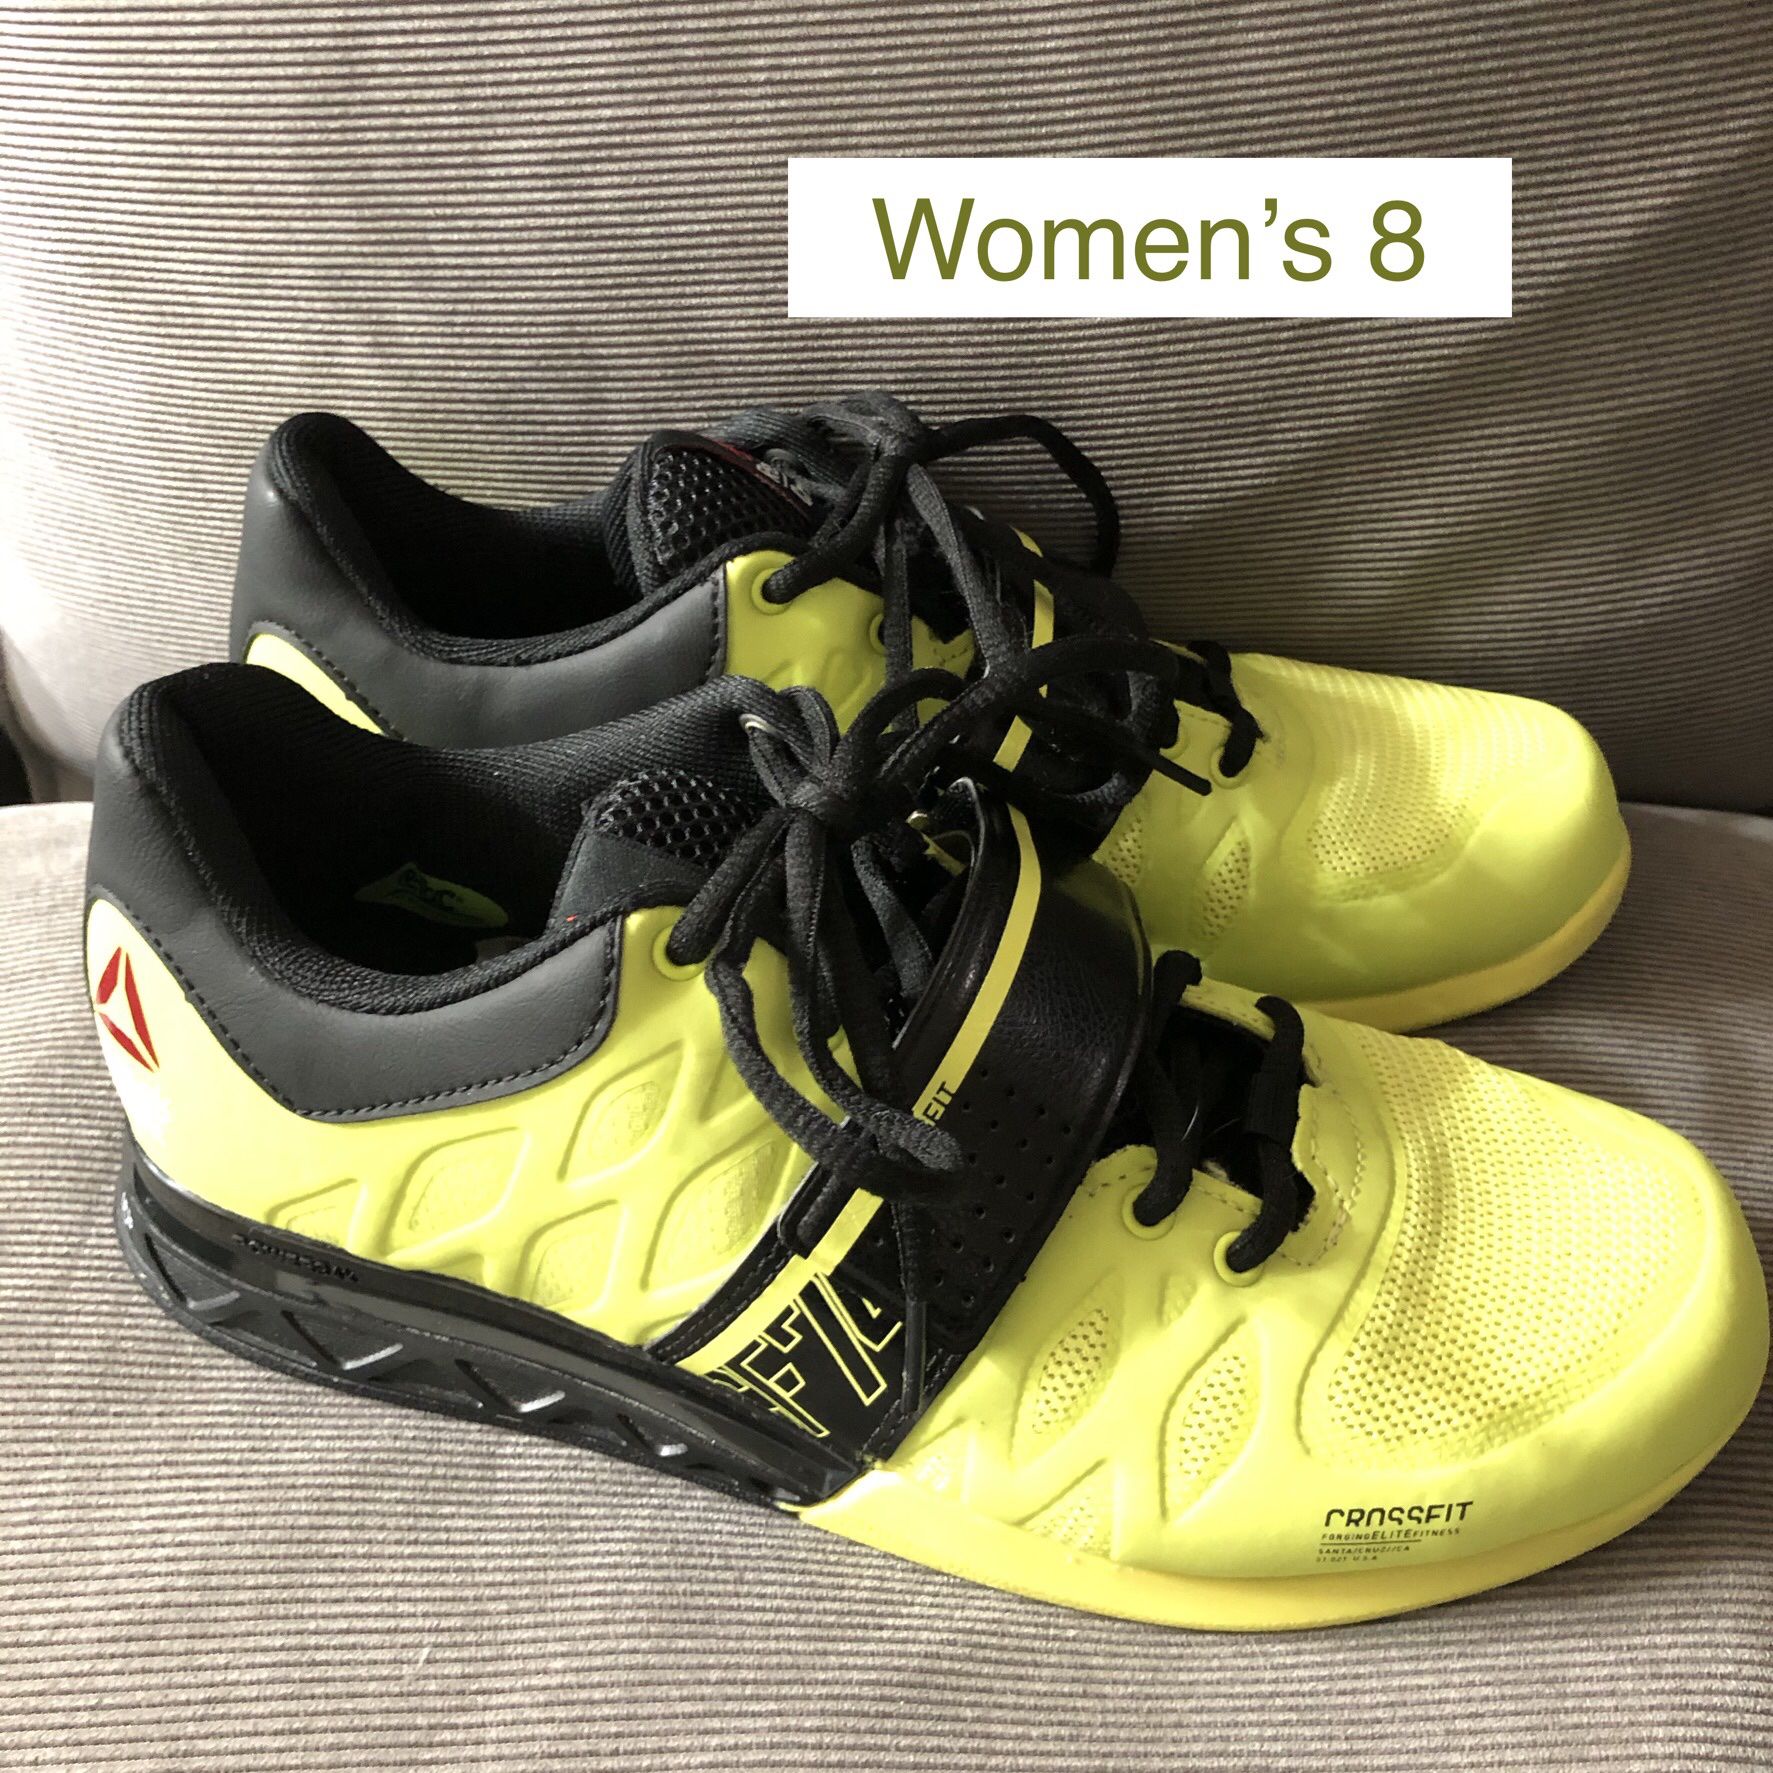 New Women’s Size 8 Reebok CrossFit CF74 Powerbax Sneakers / Shoes, Neon Yellow and Black